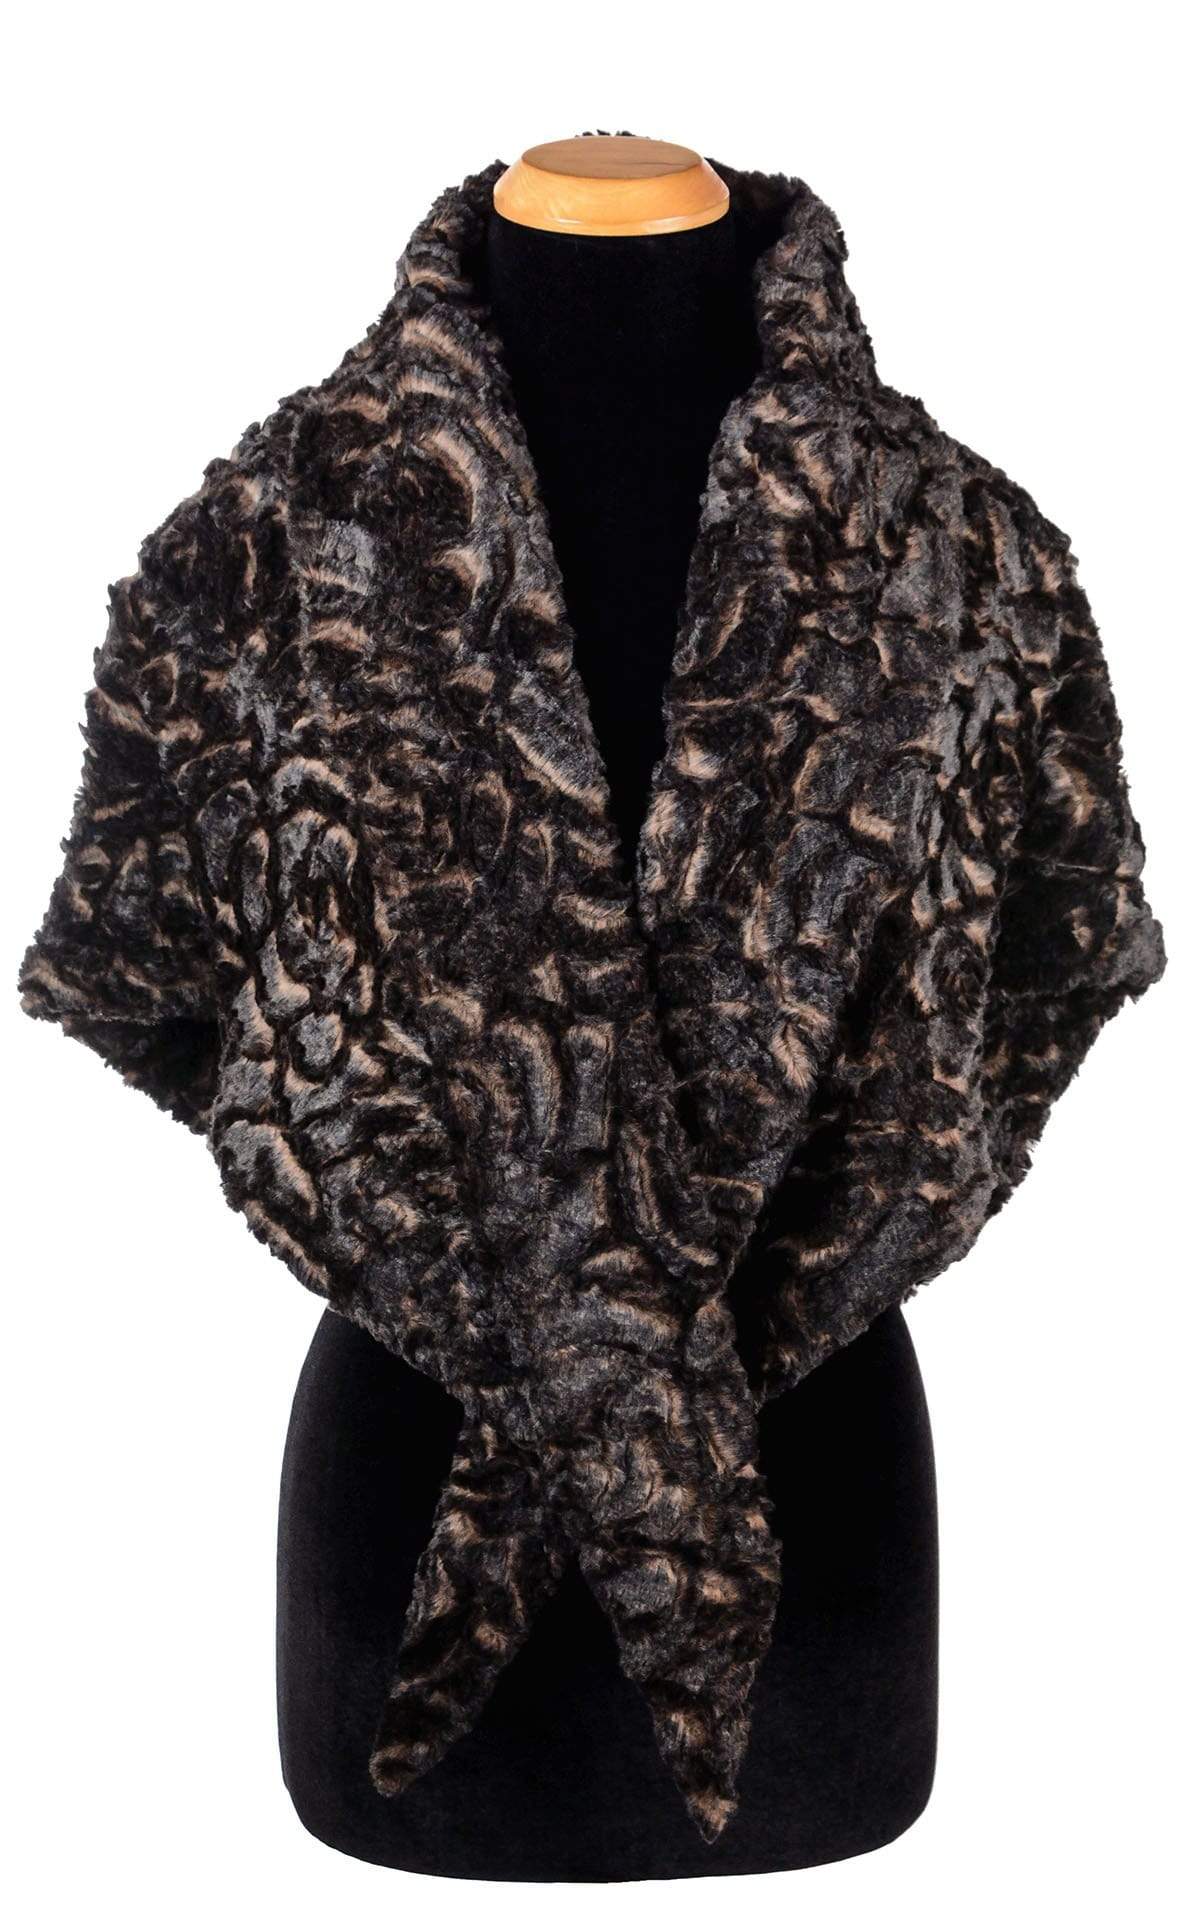 Bermuda Scarf - Luxury Faux Fur in Vintage Rose _ Sold Out!)